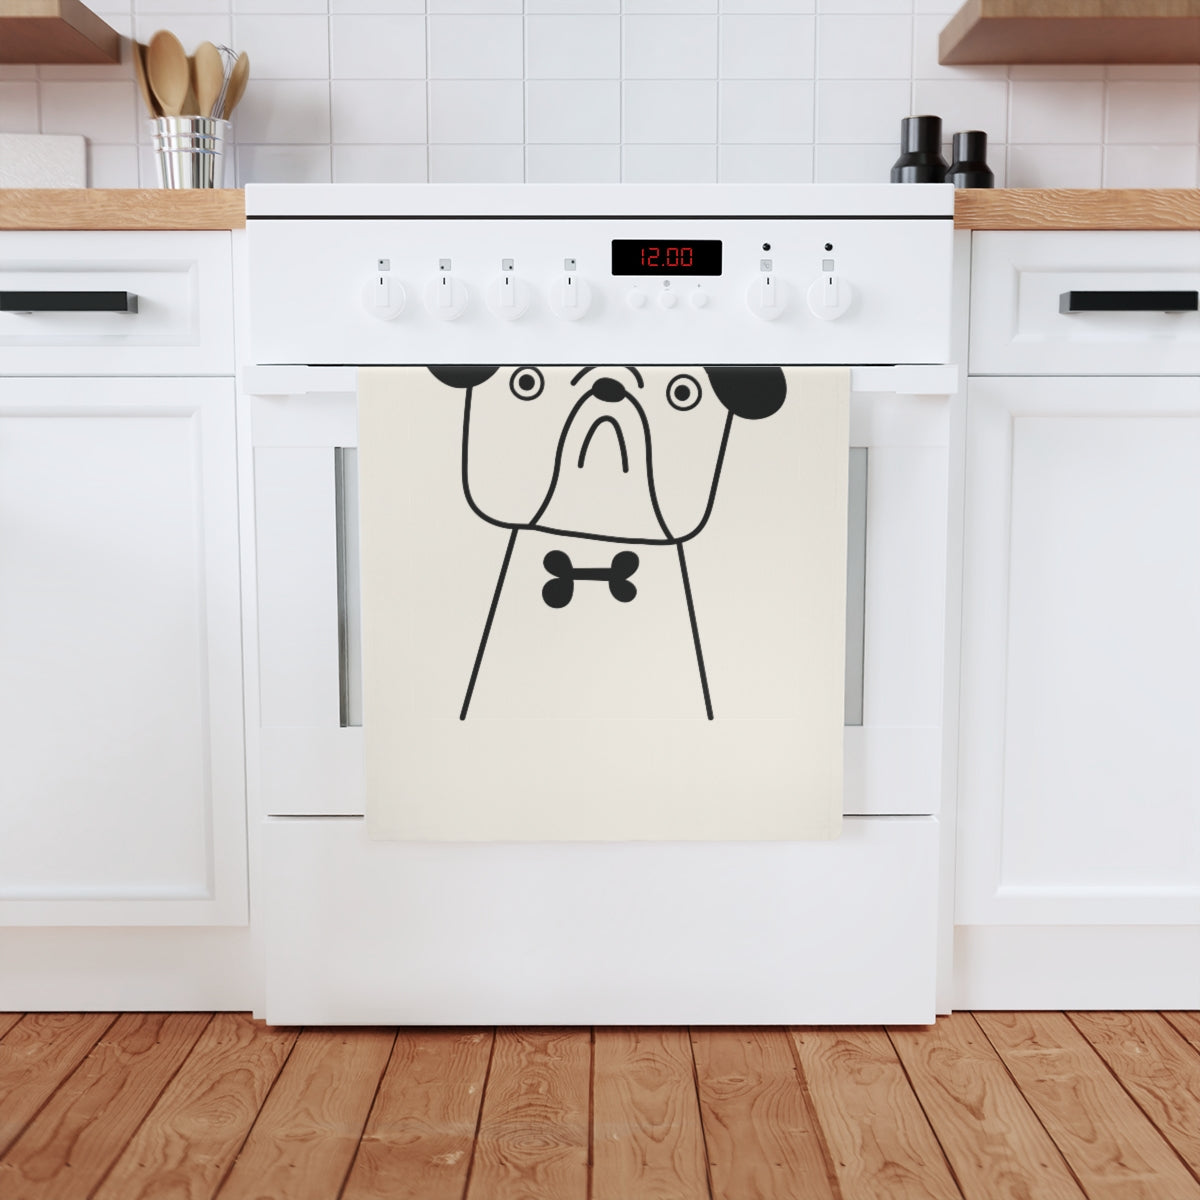 Bulldog Cotton Tea Towel, 50 x 70 cm, organic cotton, eco-friendly dog kitchen towel, bathroom hand towel with puppies